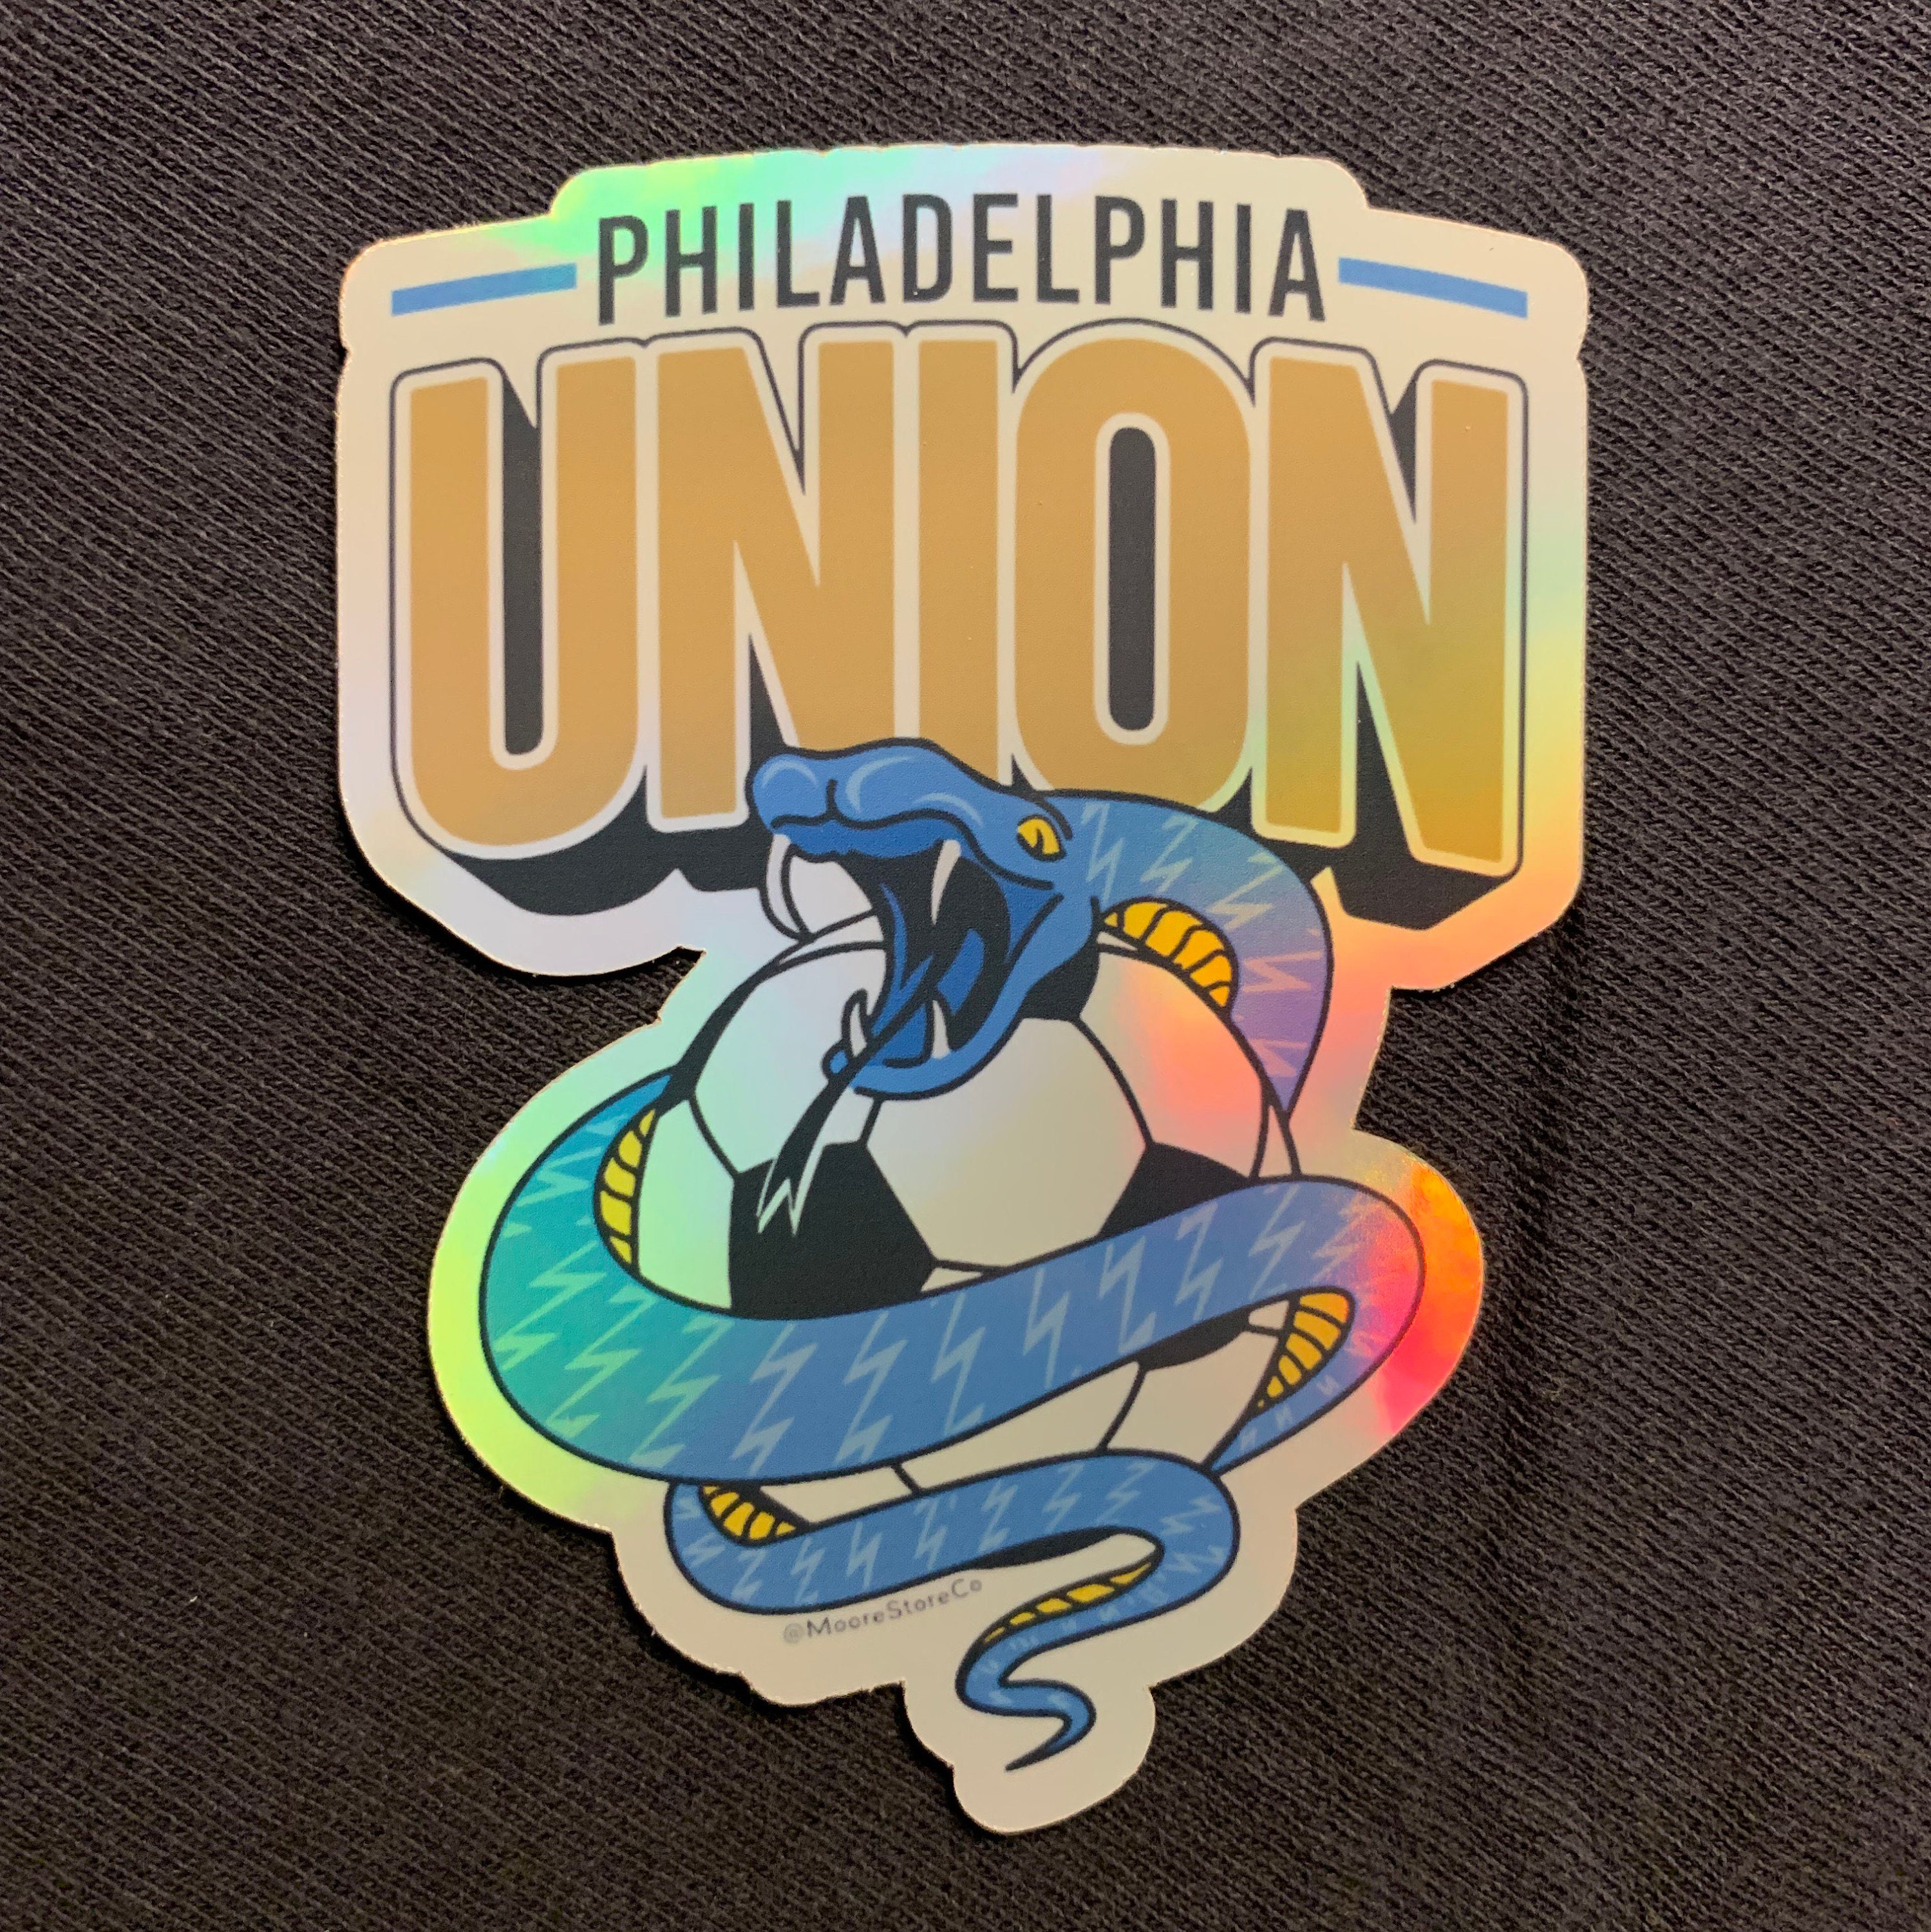 Philadelphia Union MLS is Back jerseys feature Subaru and Thomas logos on  sleeves - Brotherly Game